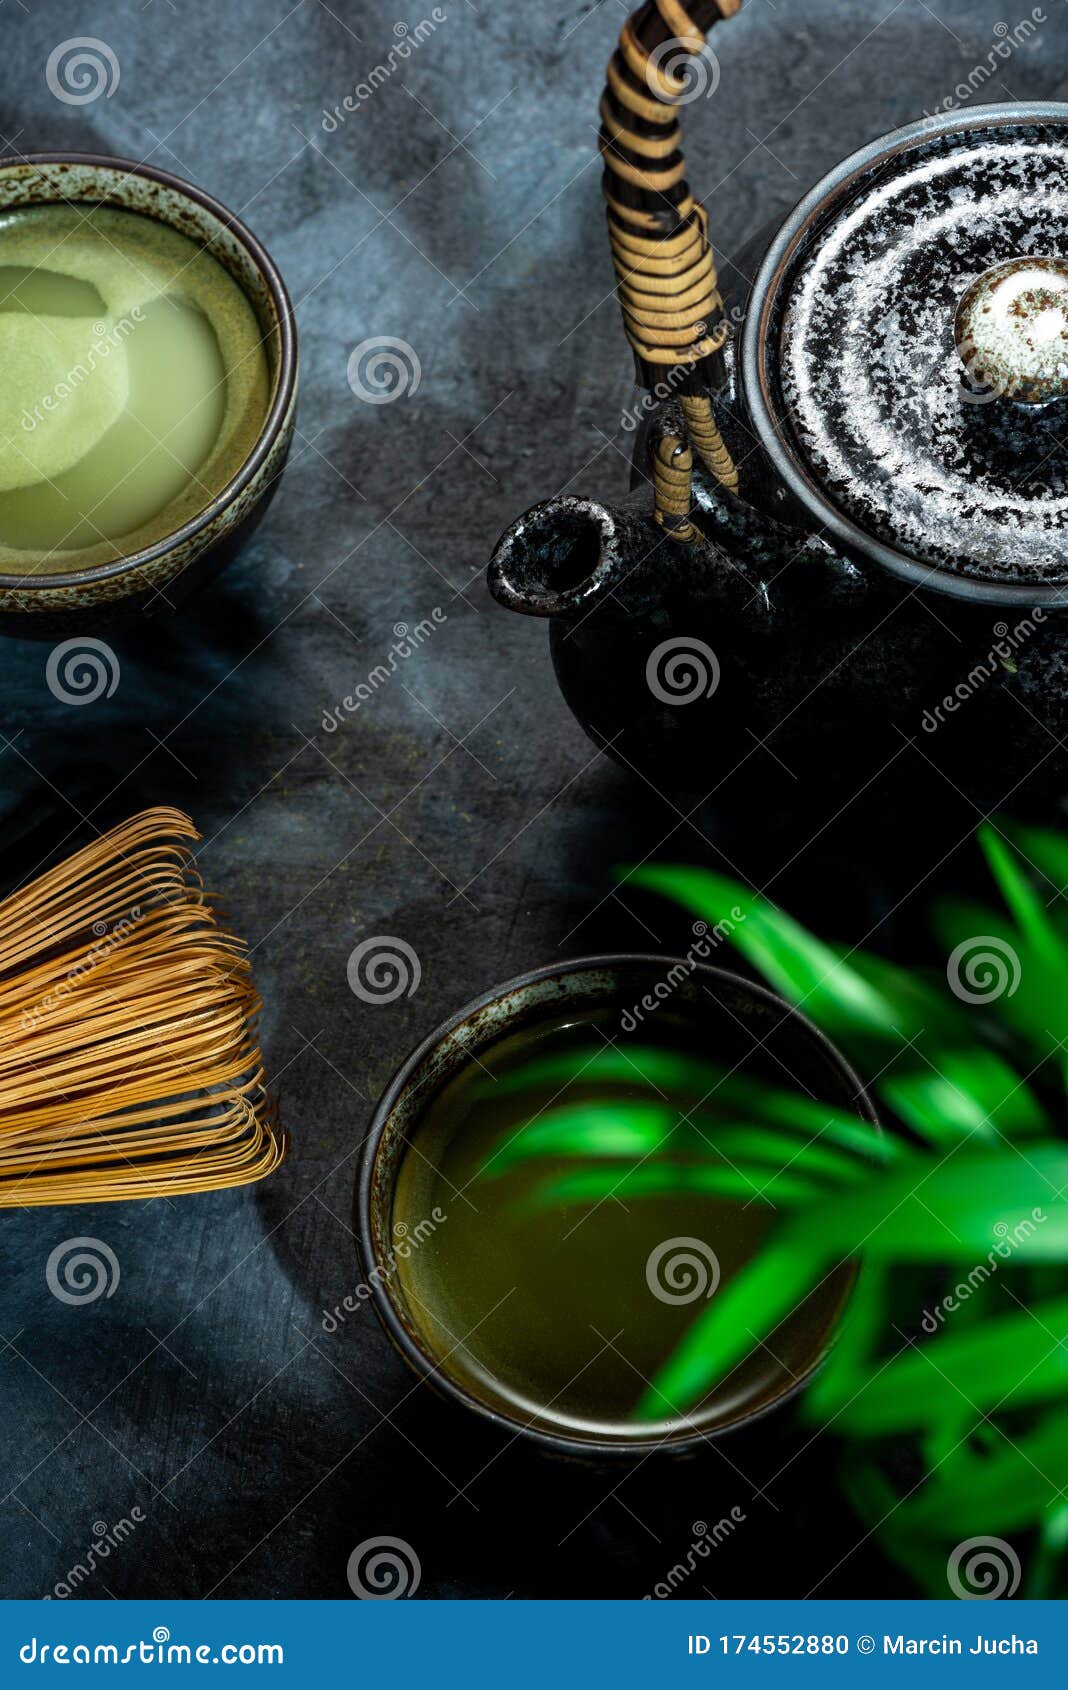 drinking green matcha tea. japanese or asian healthy bewerage